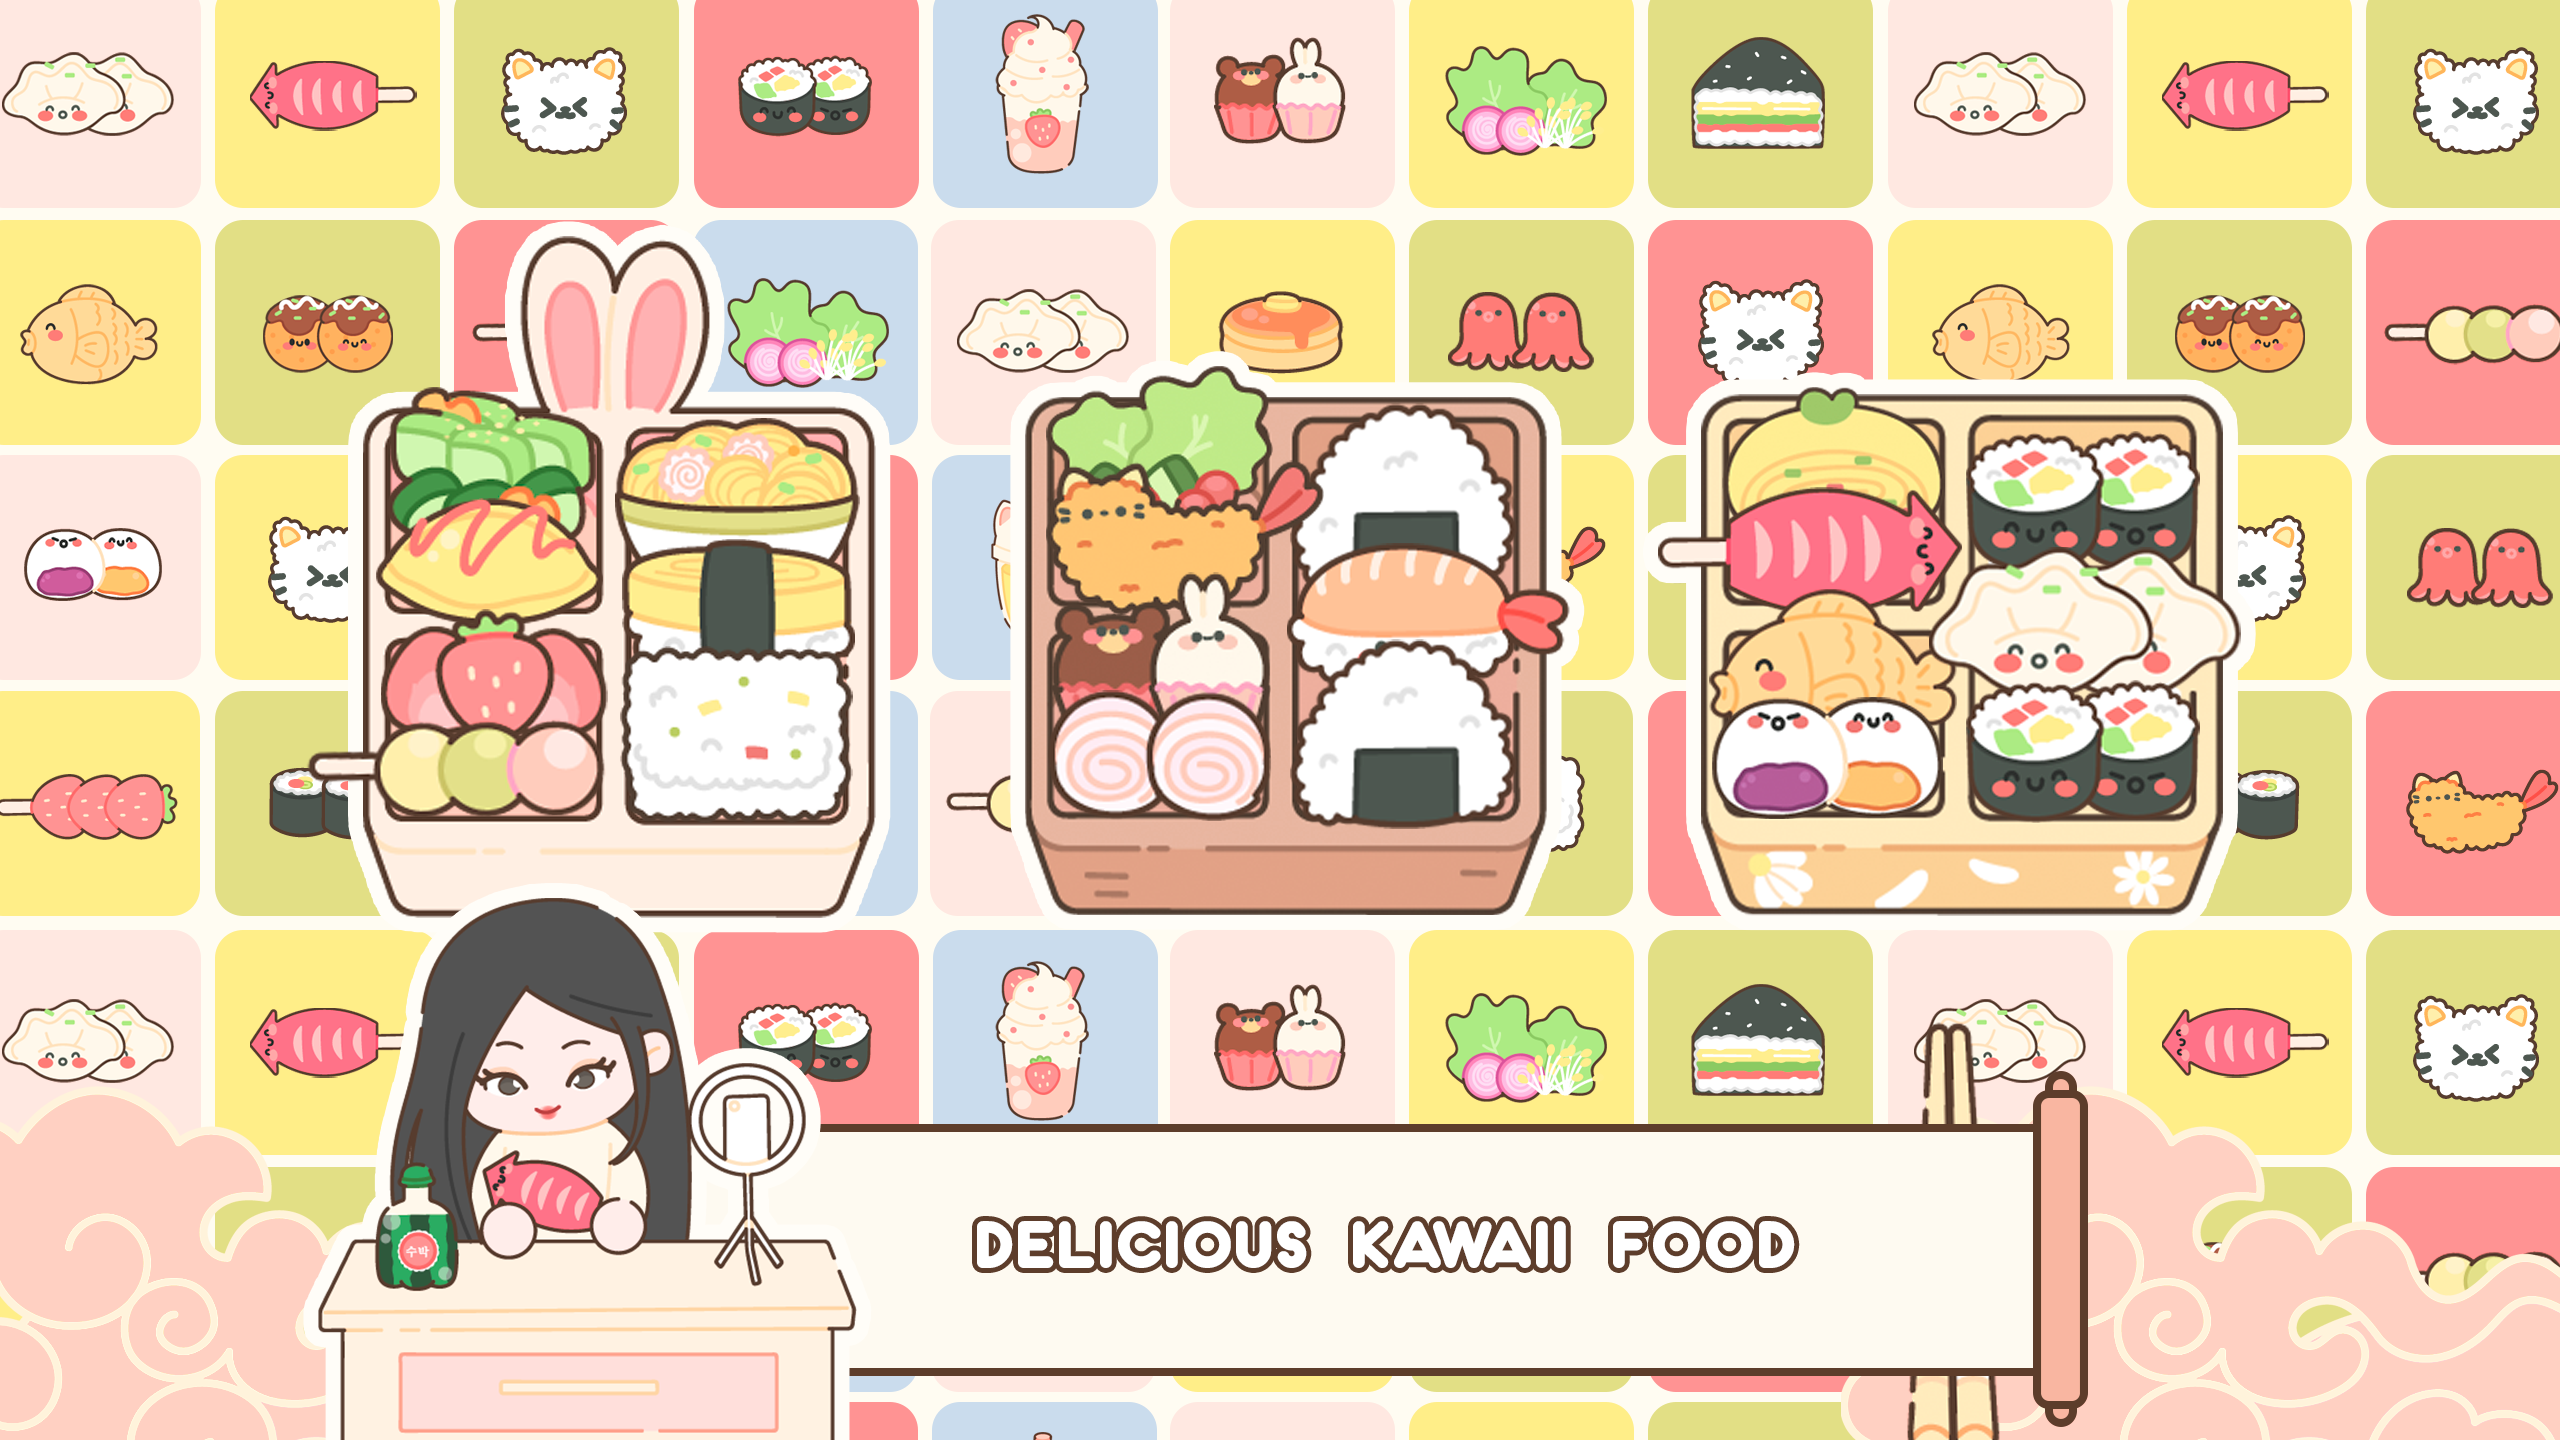 Screenshot of Kawaii Bento Friends : Cooking